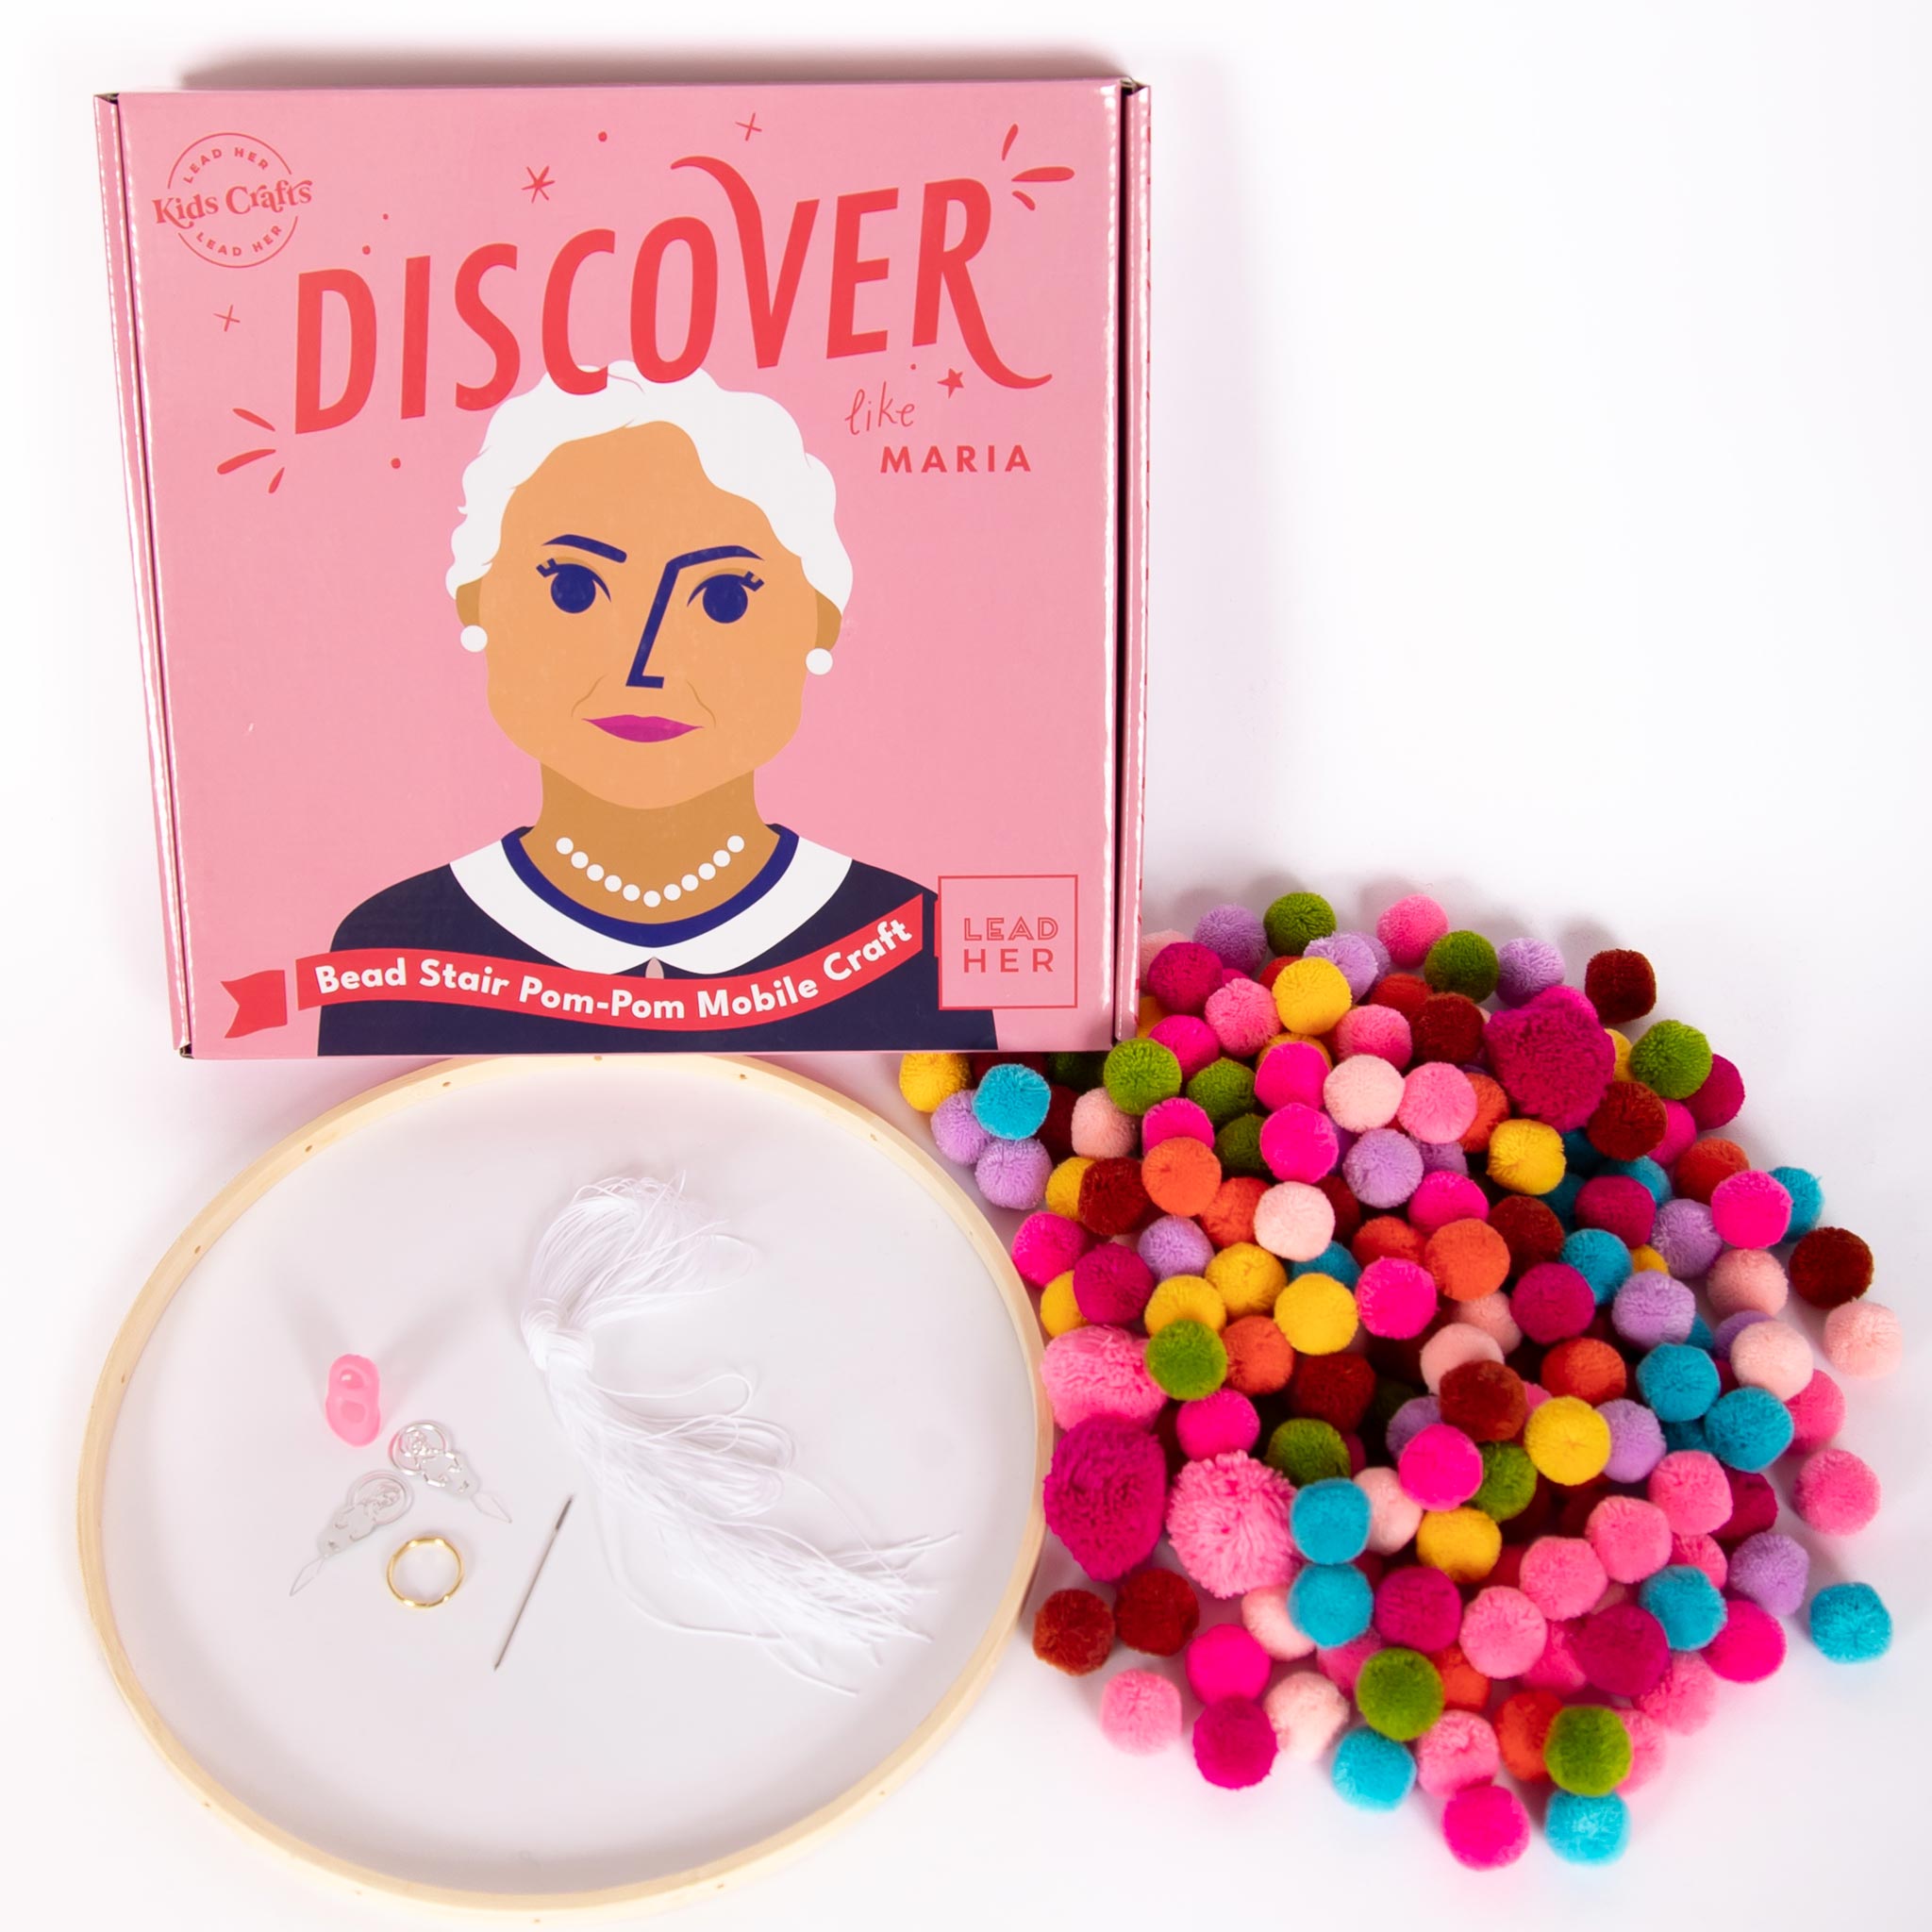 Discover Like Maria Bead Stair Pom-Pom Mobile Craft Kit - Kids Crafts